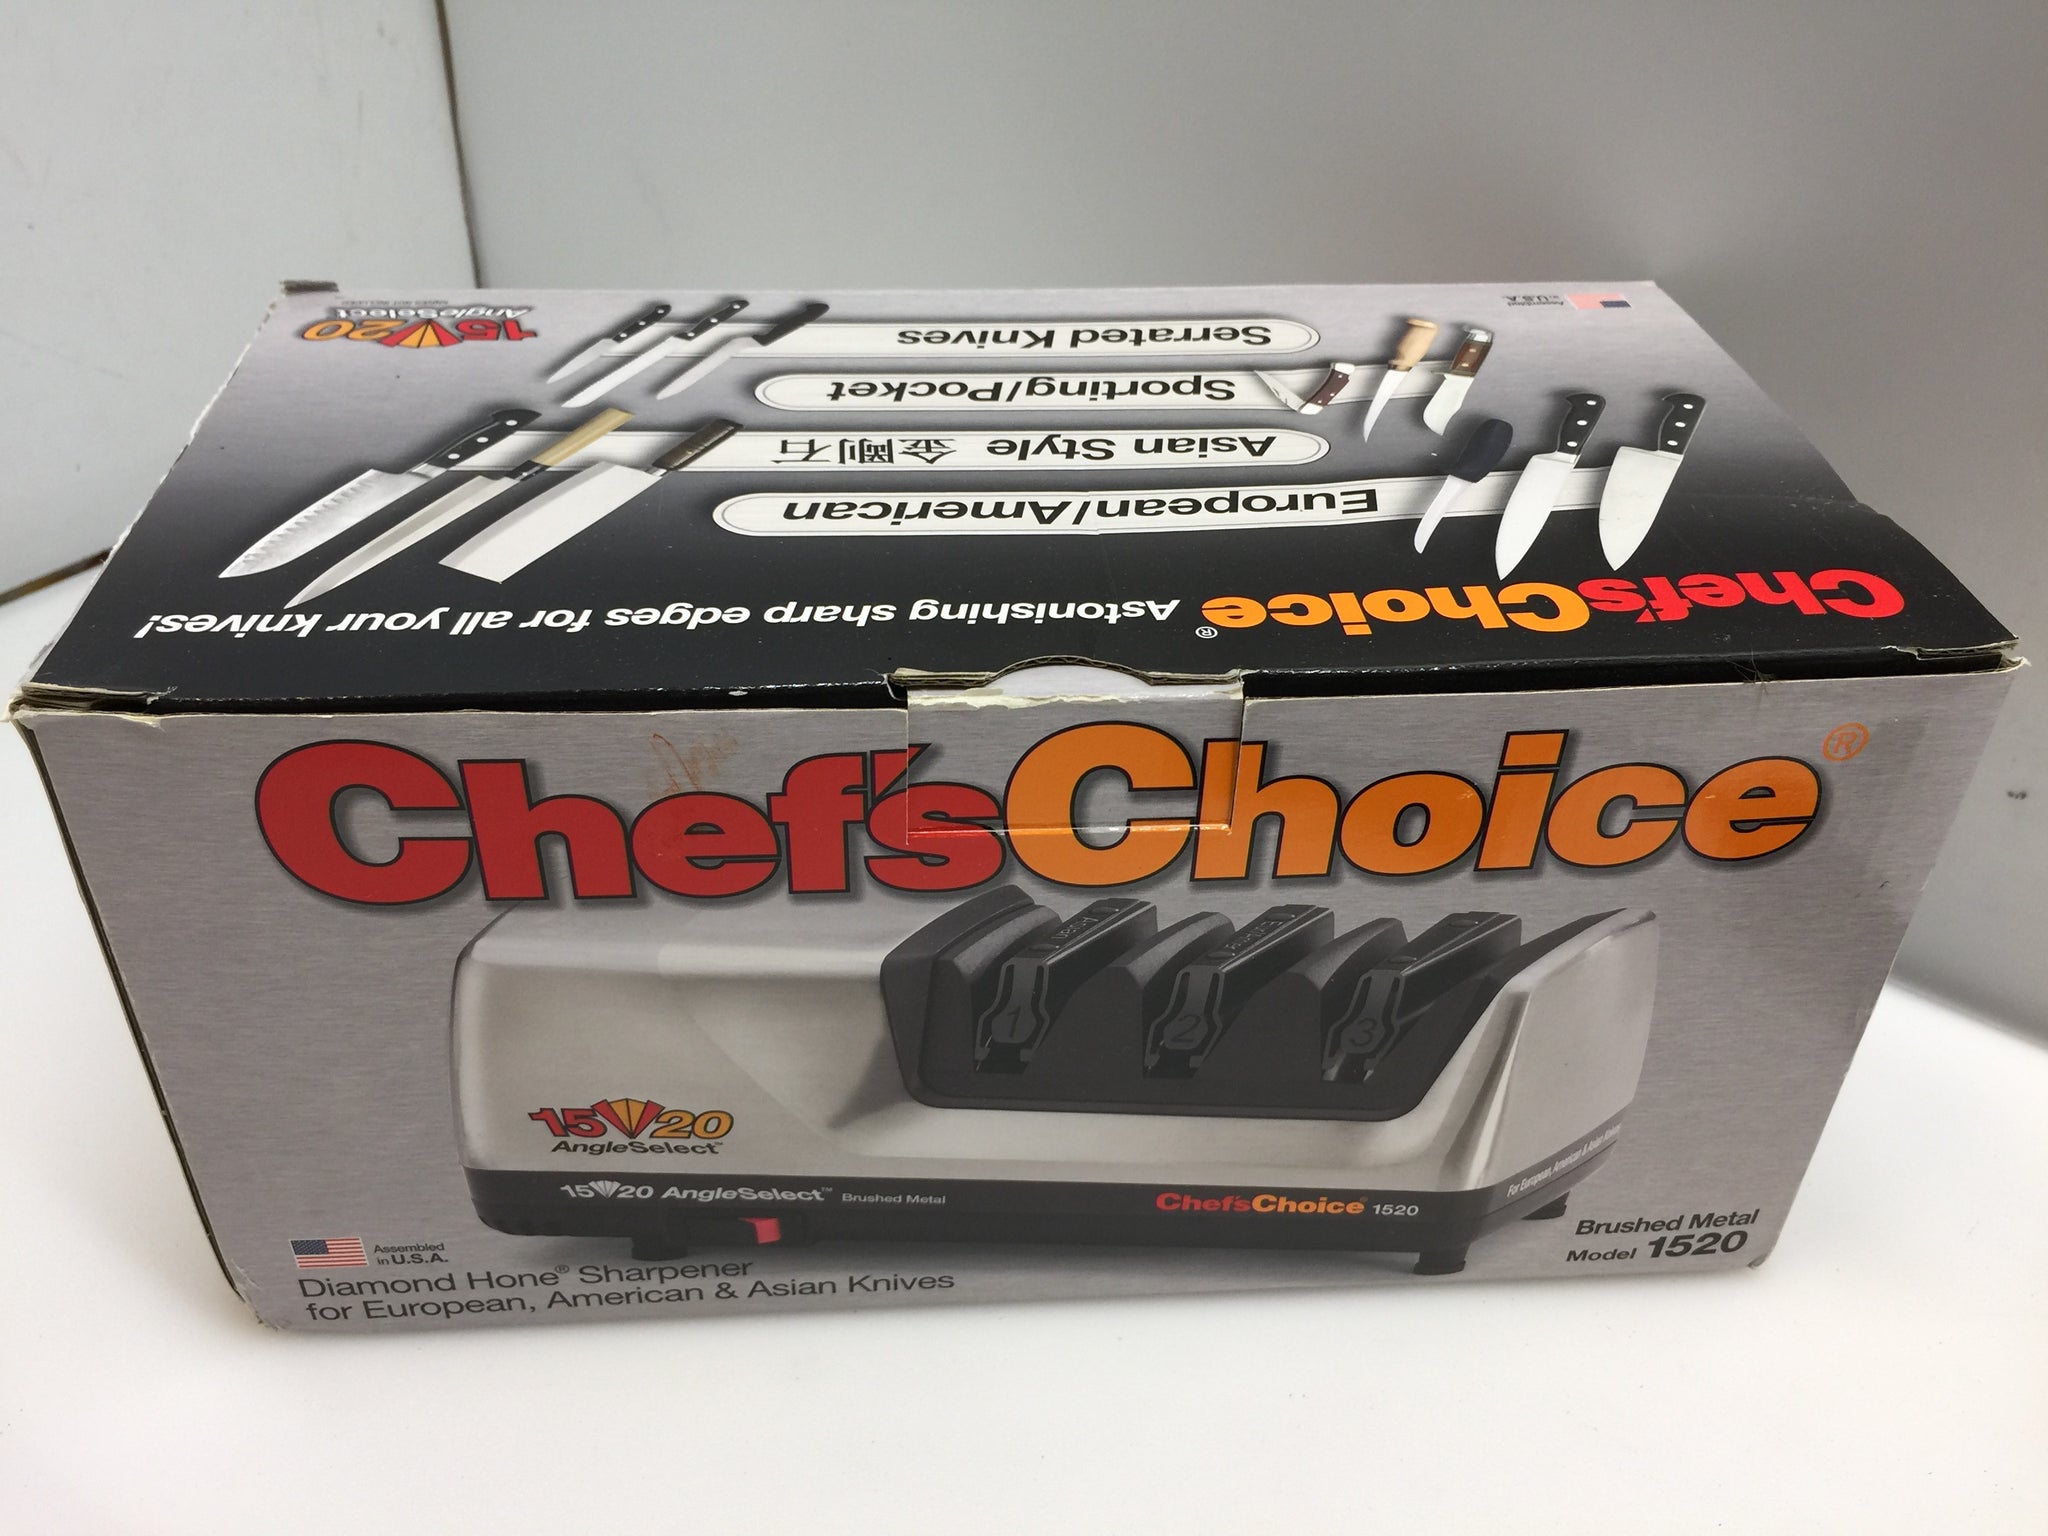 Chef’s Choice 1520 AngleSelect Diamond Hone Electric Knife Sharpener - Black